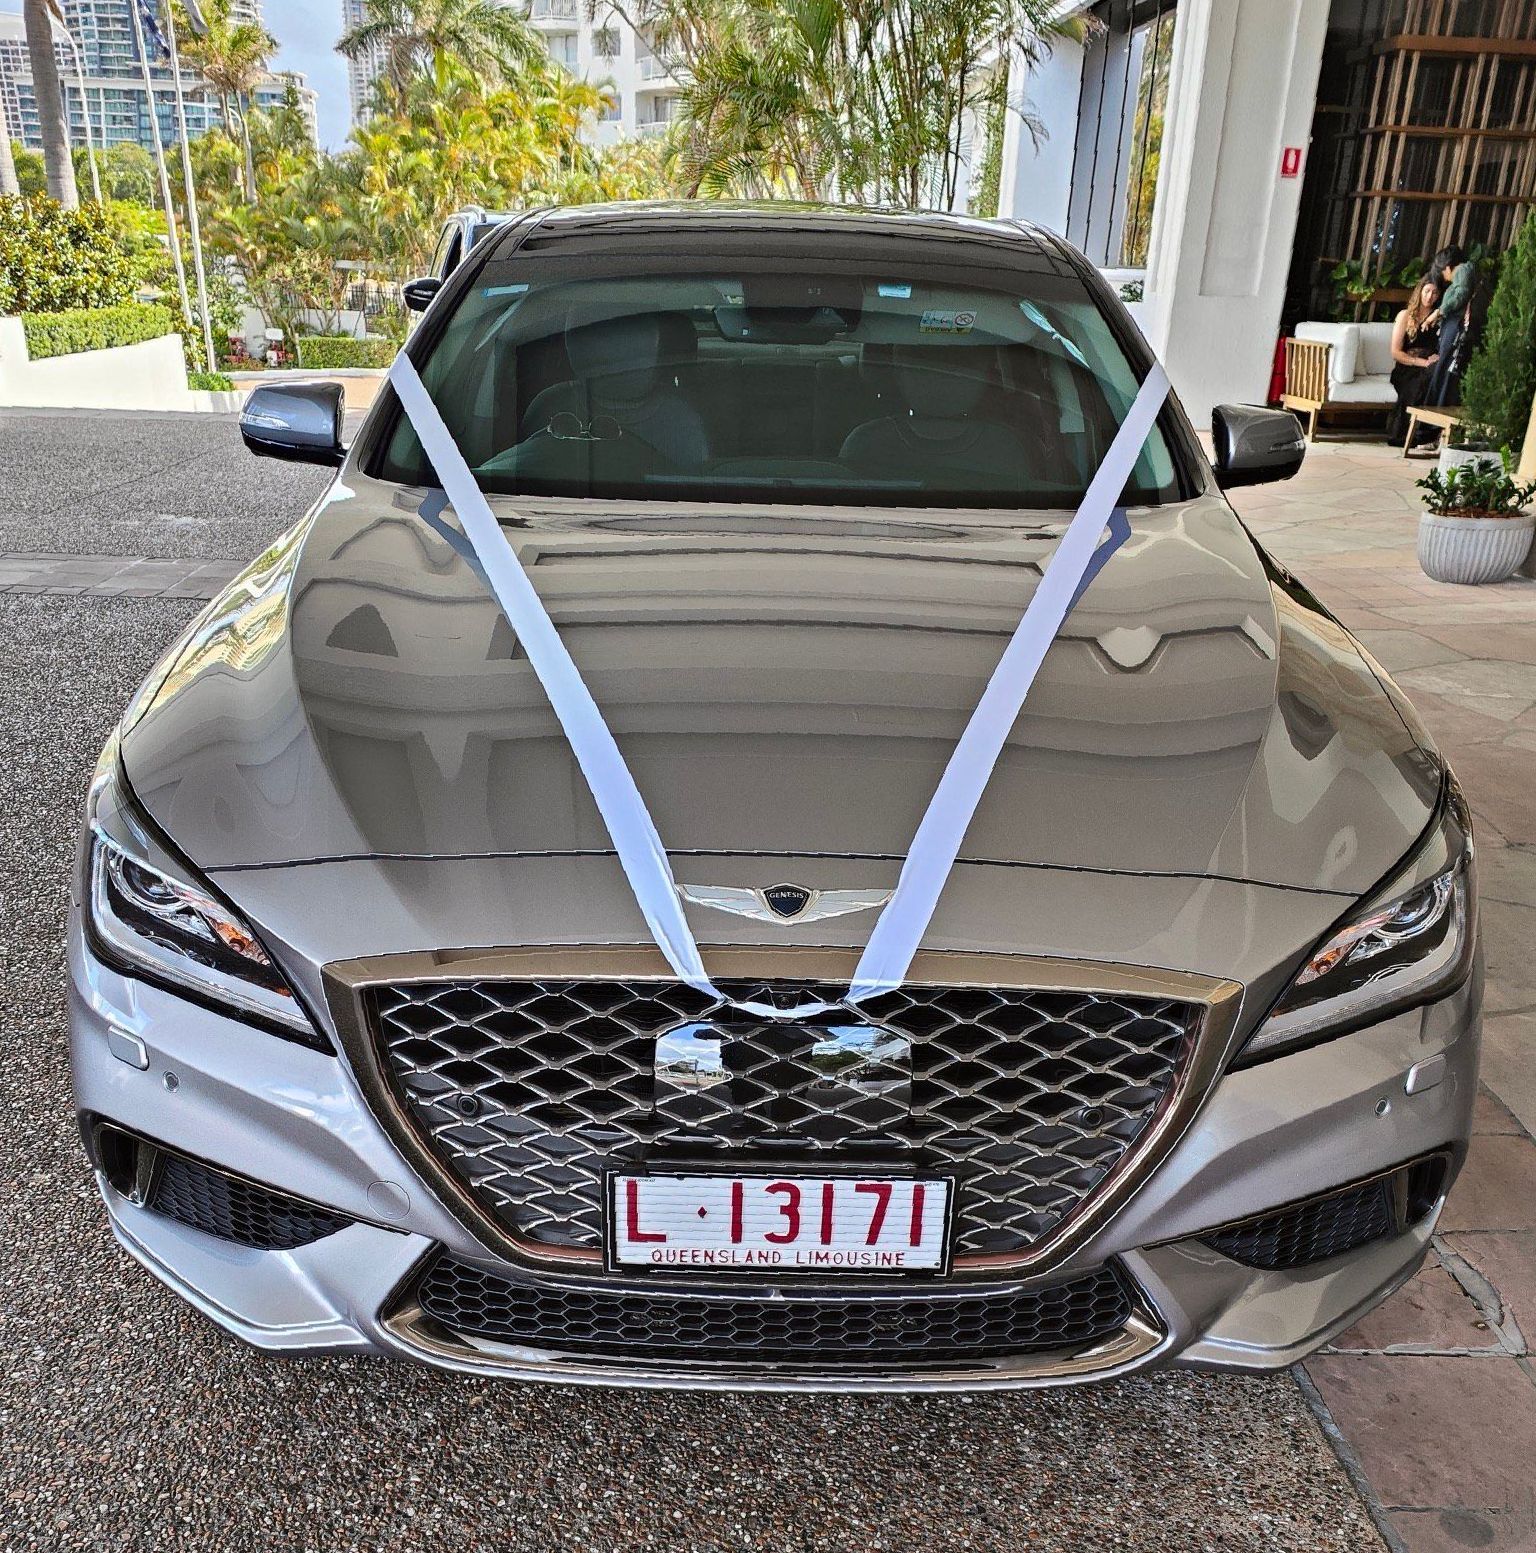 Private White Car — Limo Hire in Gold Coast, QLD